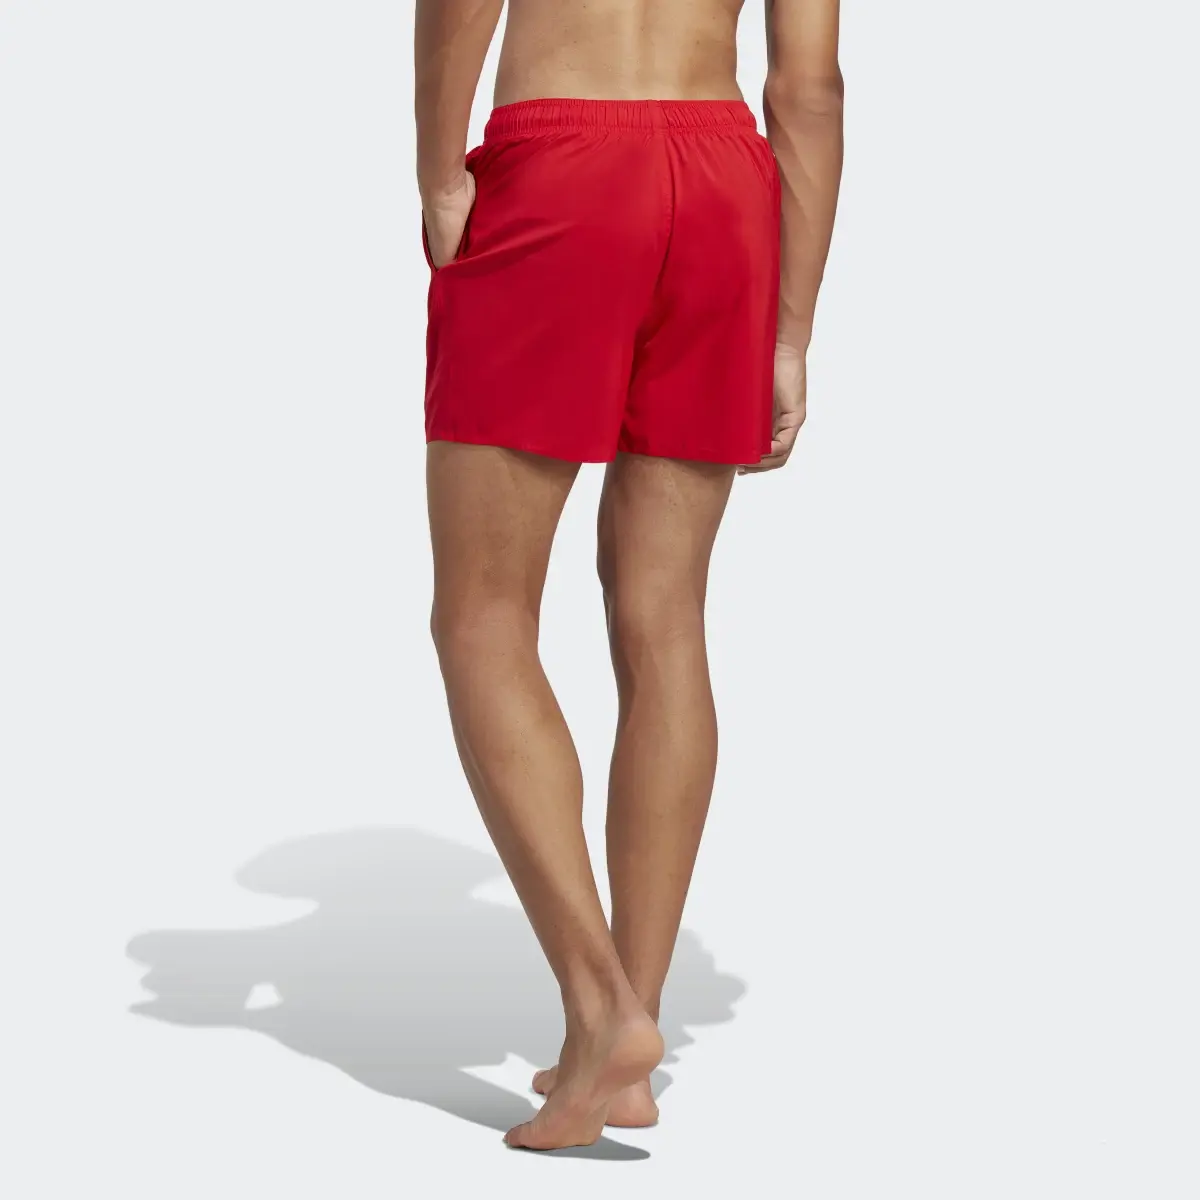 Adidas Short Length Solid Swim Shorts. 3